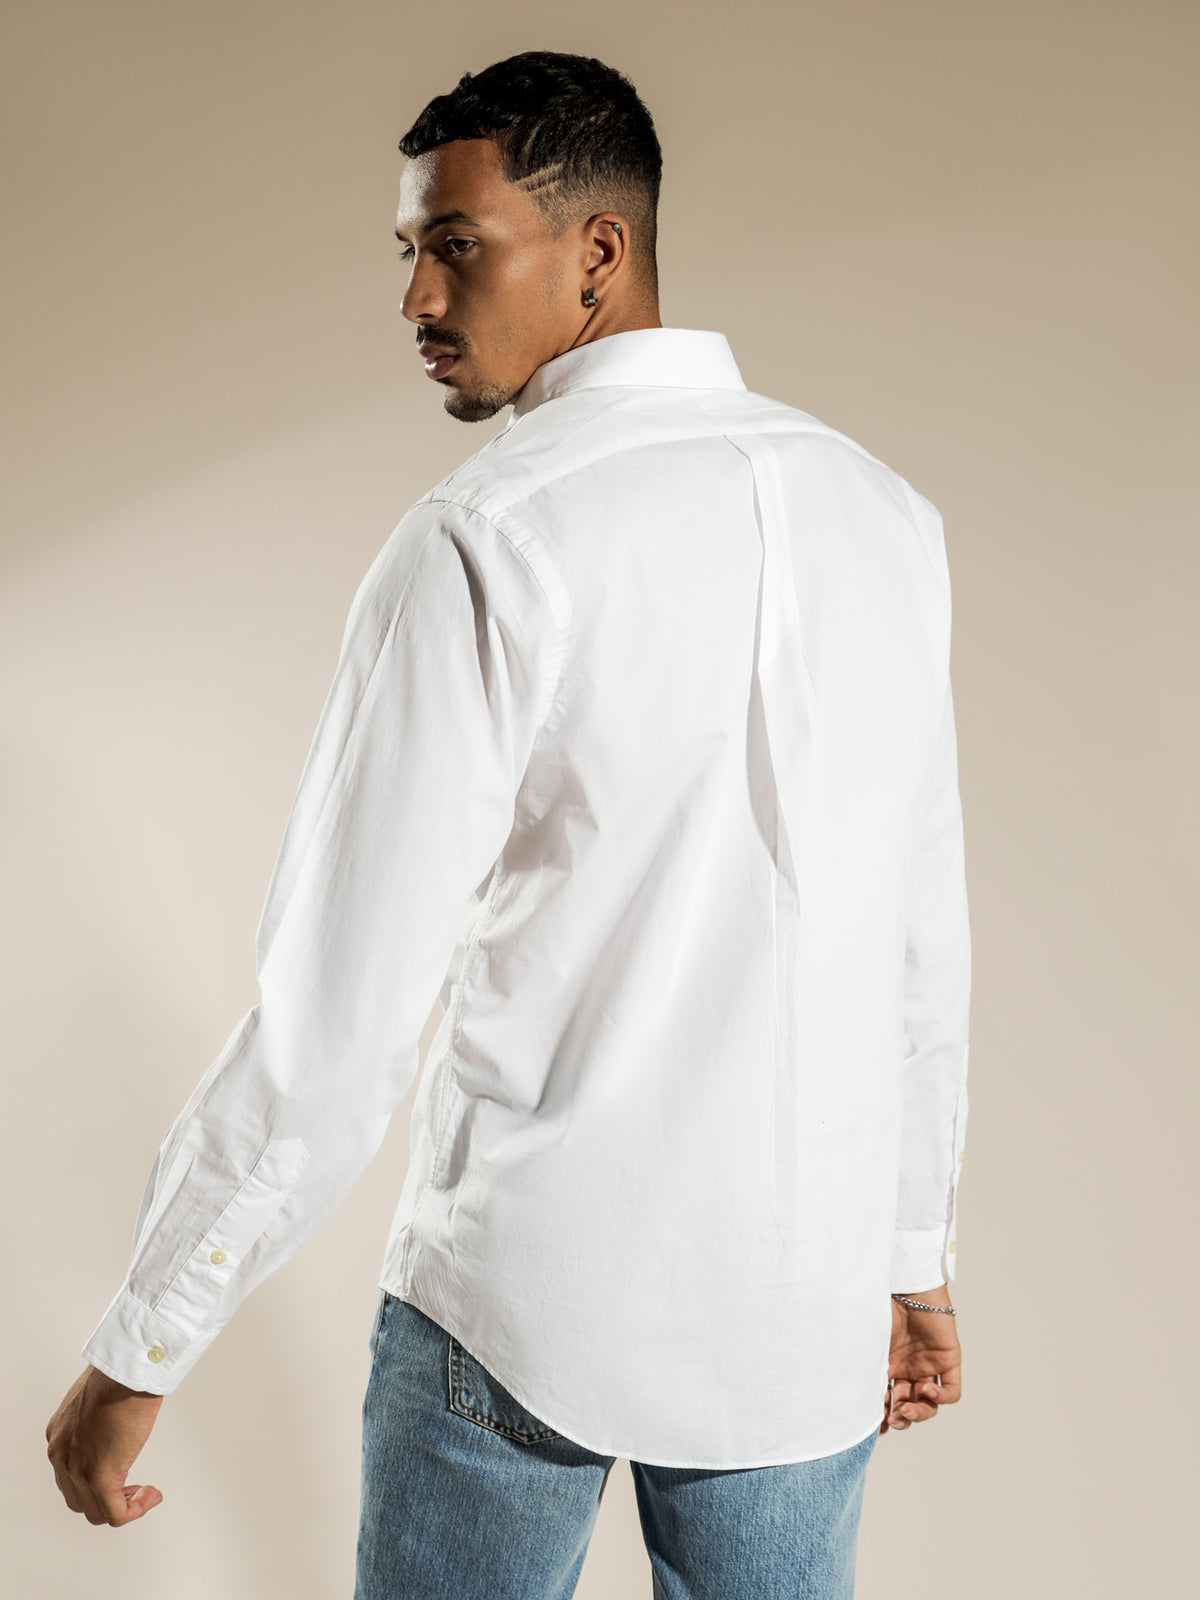 Custom Fit Shirt in White